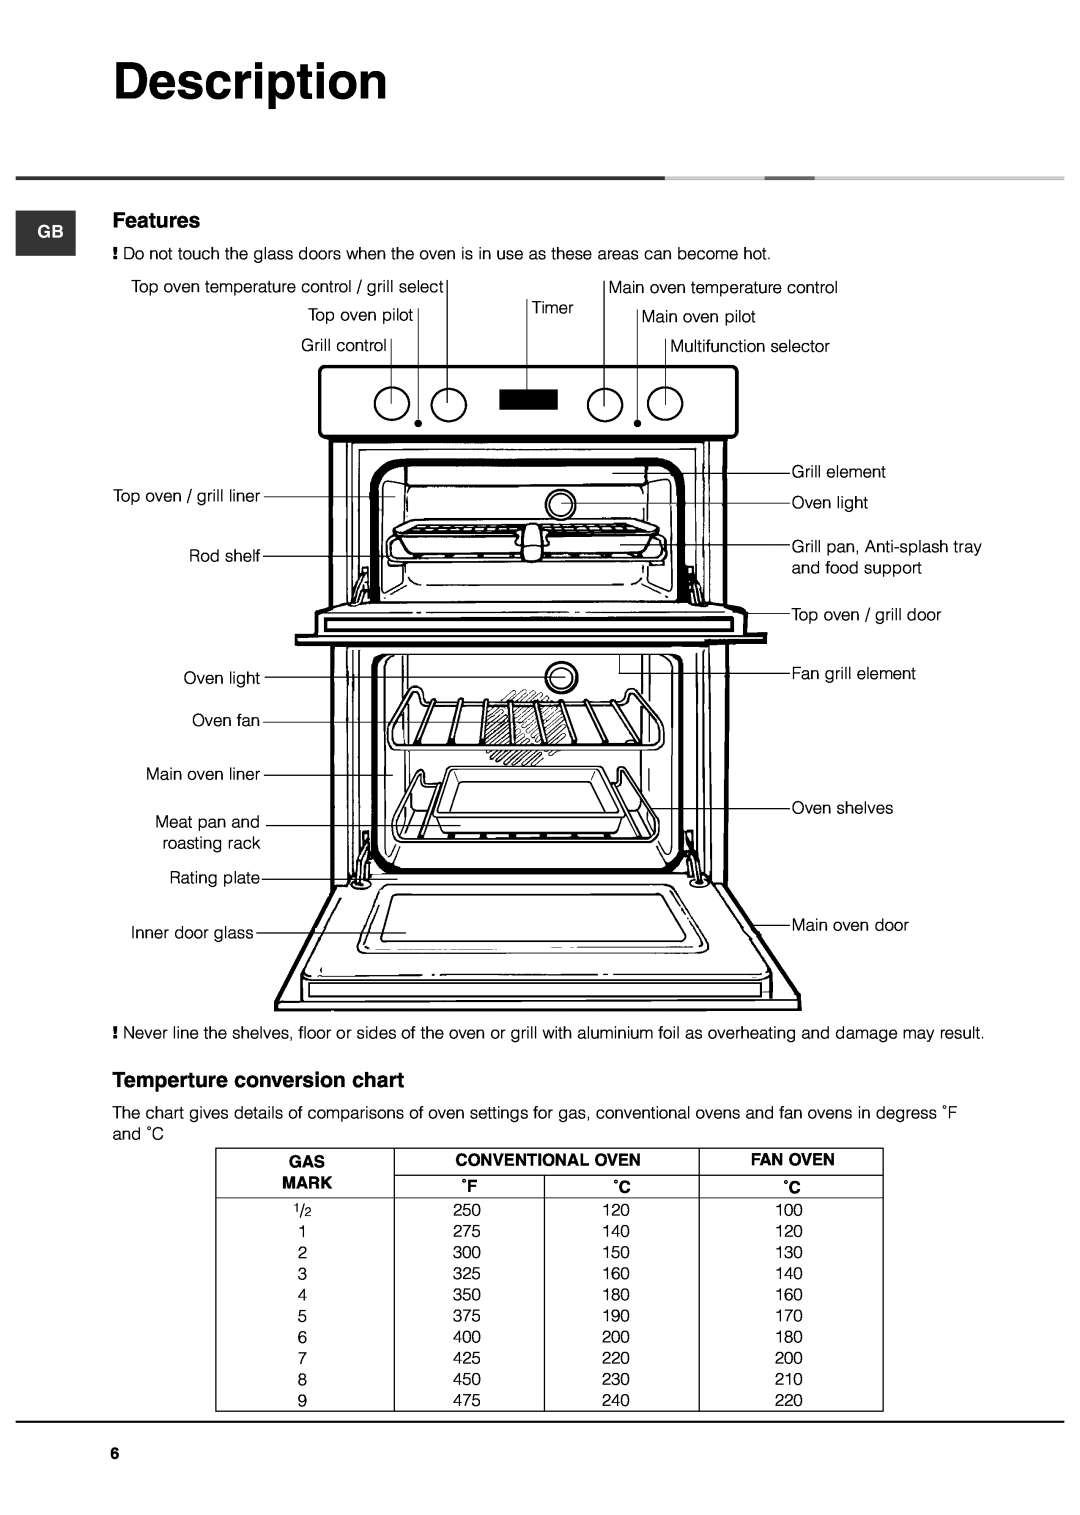 Ariston DB62 Description, Features, Temperture conversion chart, Conventional Oven, Fan Oven, Mark 